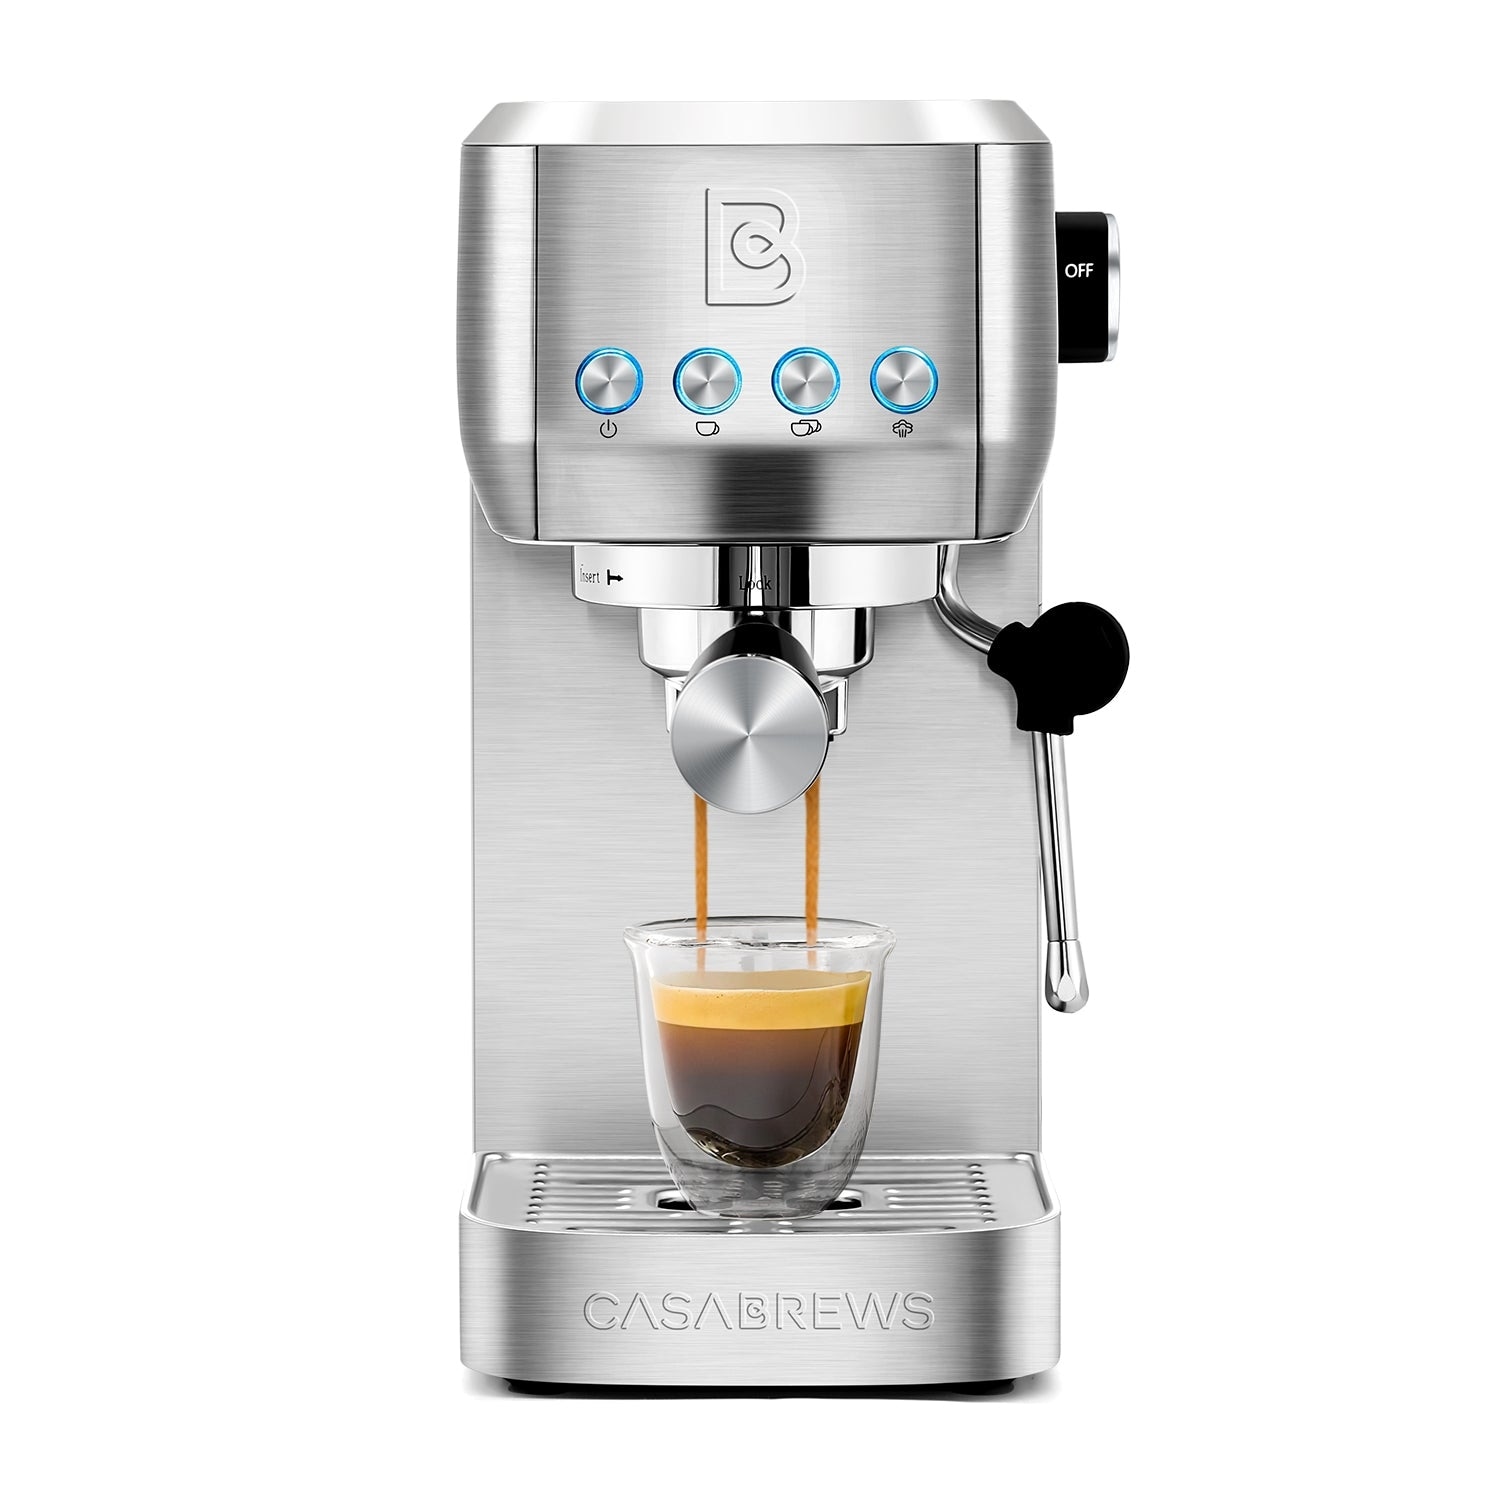 https://ak1.ostkcdn.com/images/products/is/images/direct/9bbe3df59bf5766059d9fb8a571d9b4158fadada/Casabrews-20-Bar-Espresso-Coffee-Machine-with-Space-Saving-Design.jpg